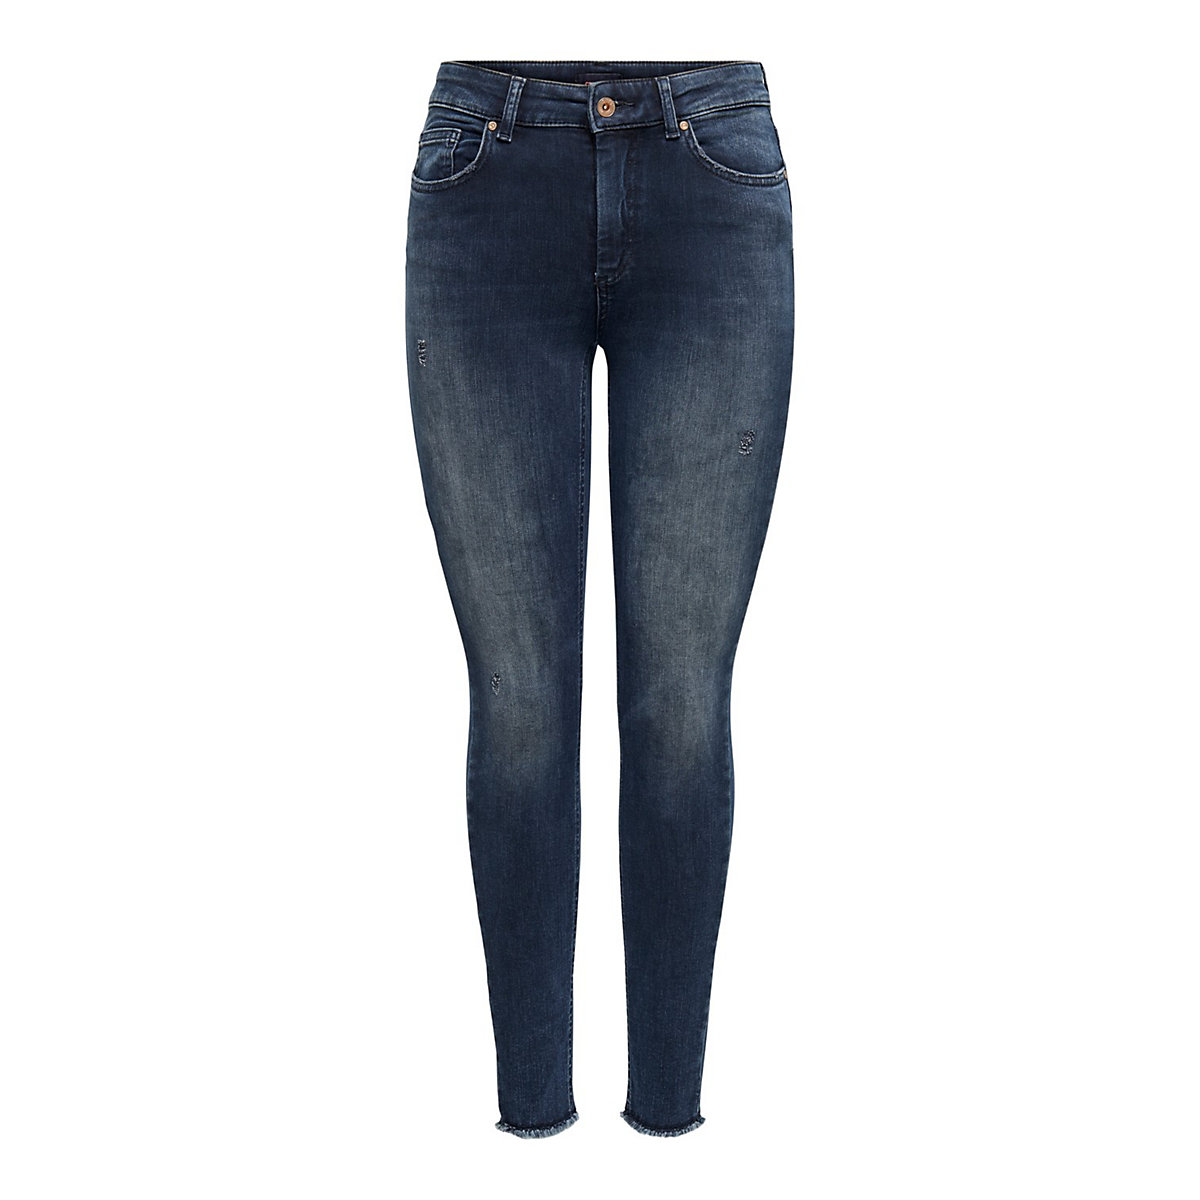 ONLY Skinny Fit Ankle Jeans ONLBLUSH Denim Hose Fransen dunkelblau PR9677